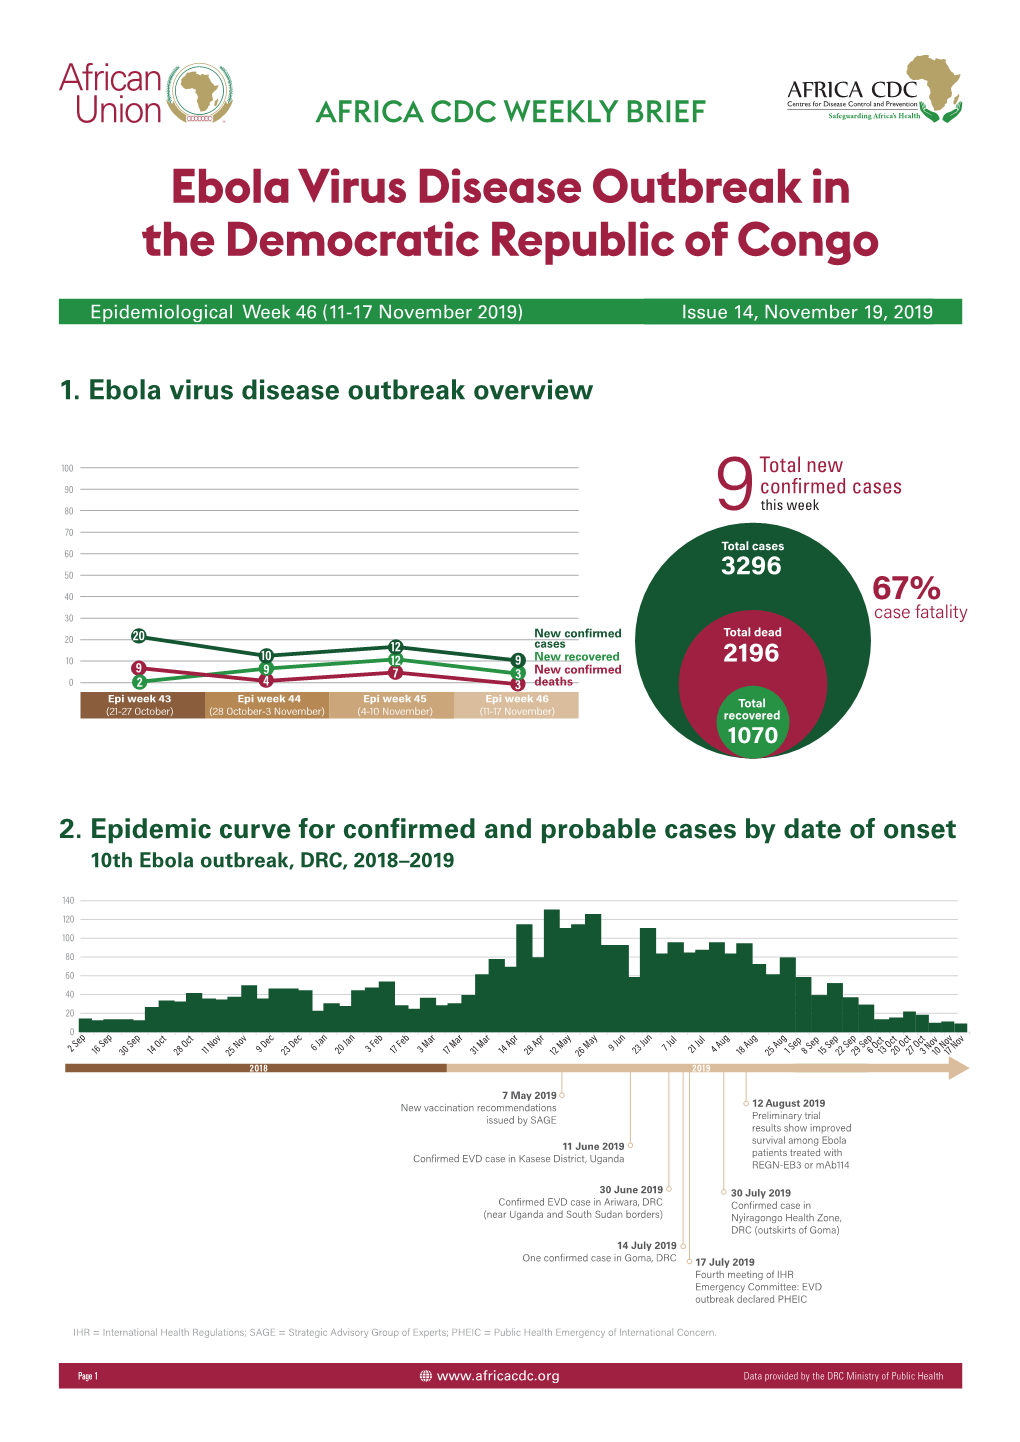 Ebola Virus Disease Outbreak in the Democratic Republic of Congo